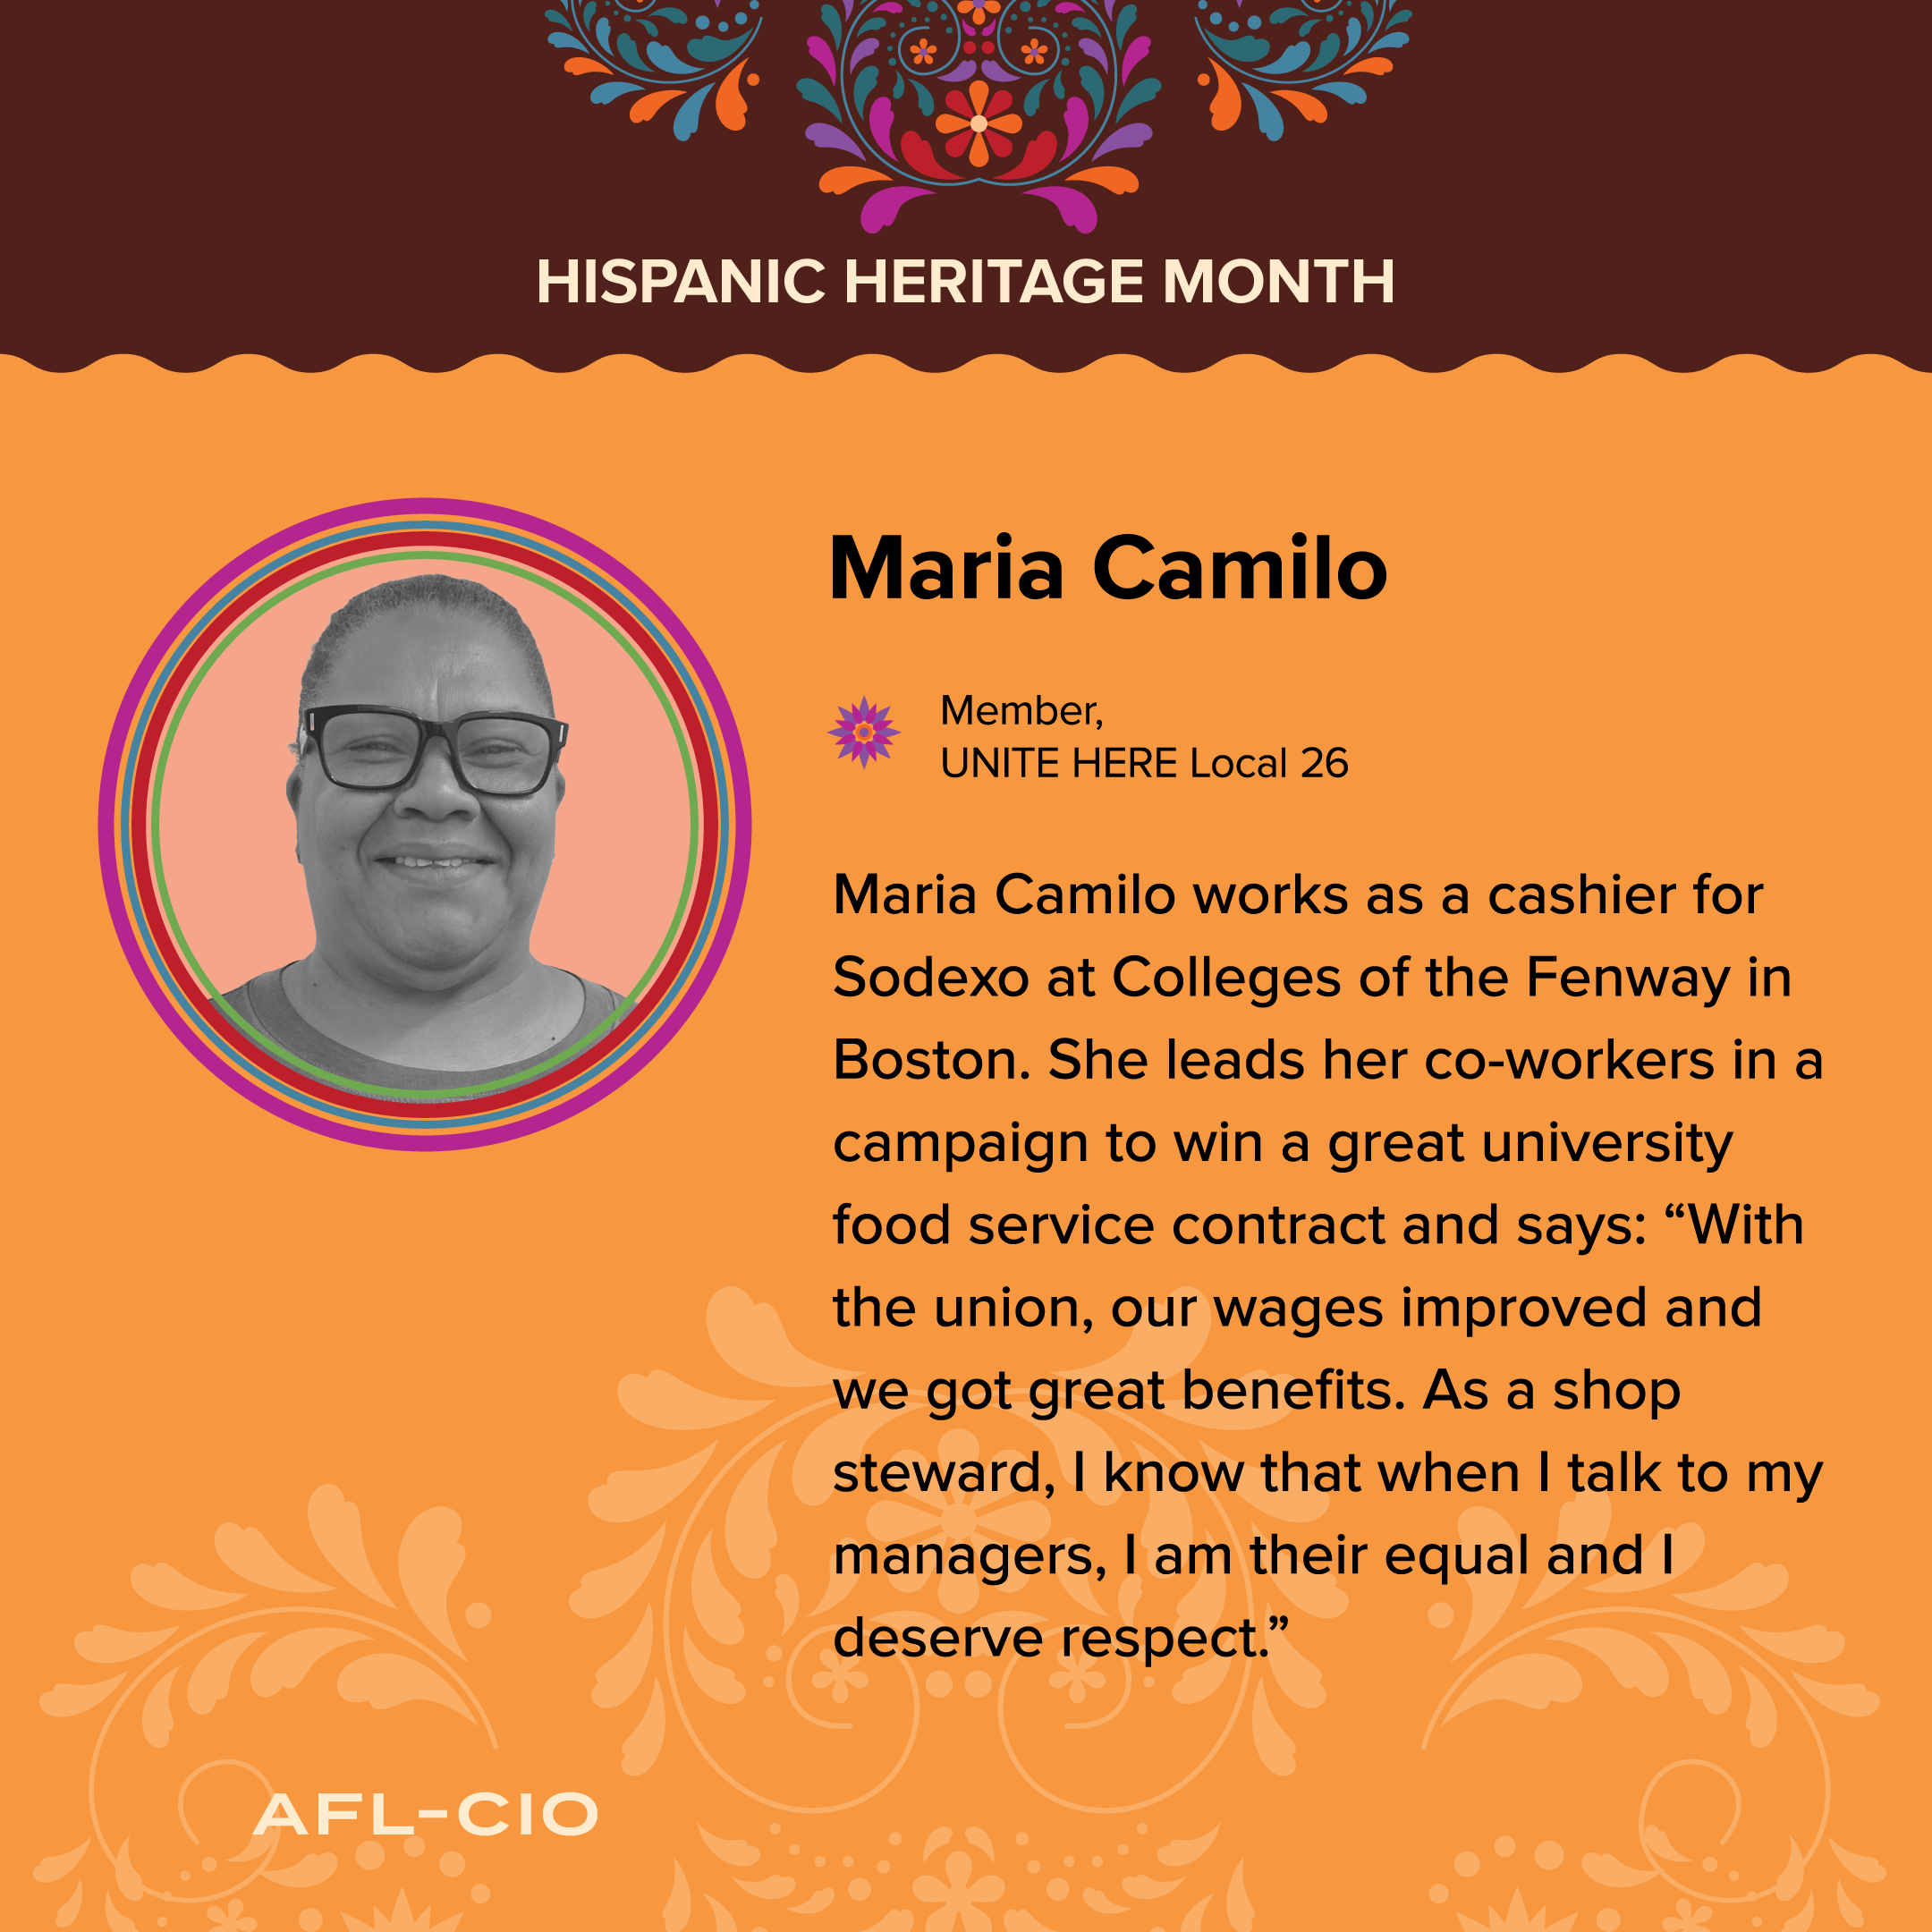 Hispanic Heritage Month Profiles: Maria Camilo